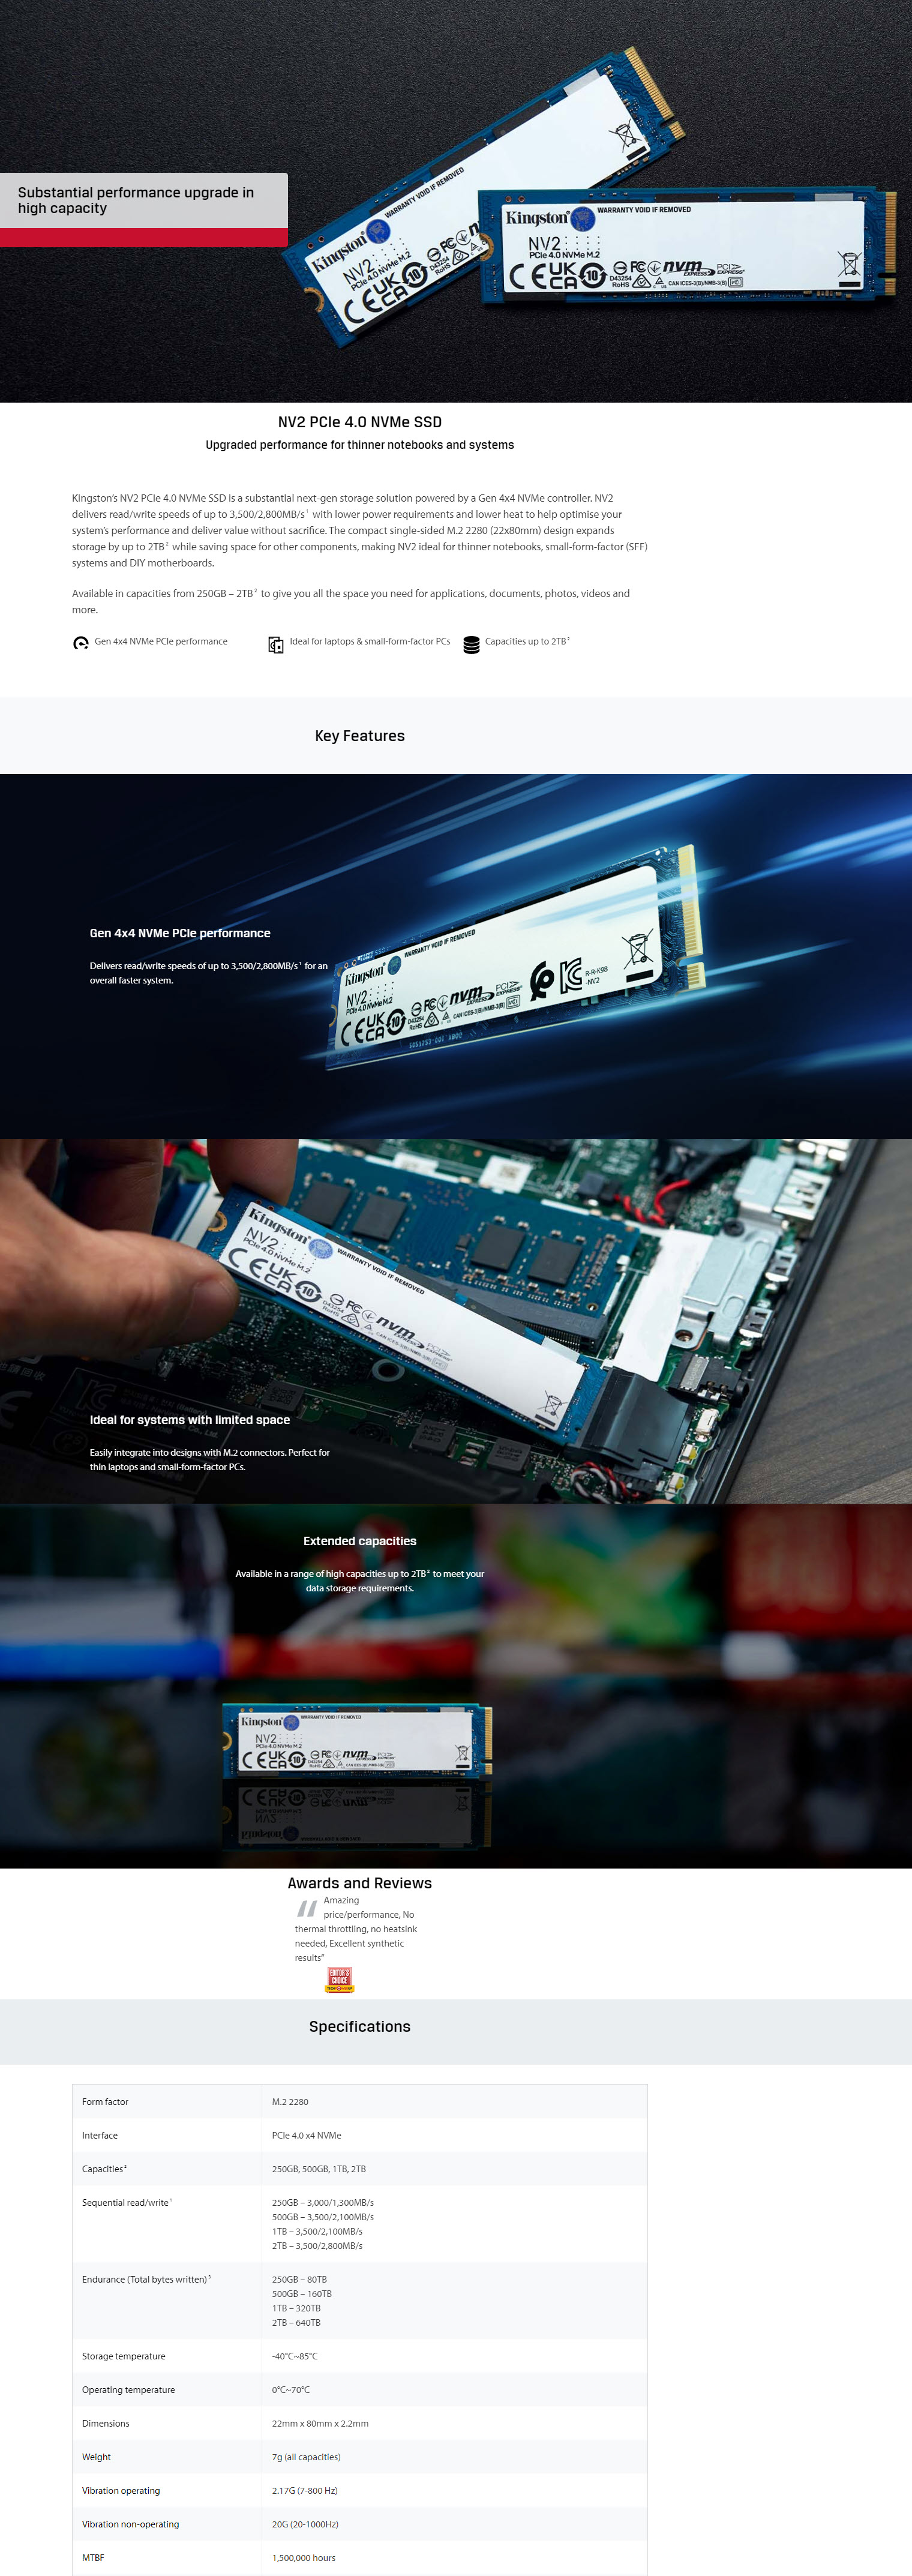 Kingston NV2 500G M.2 2280 NVMe PCIe Internal SSD Up to 3500 MB/s  SNV2S/500G 